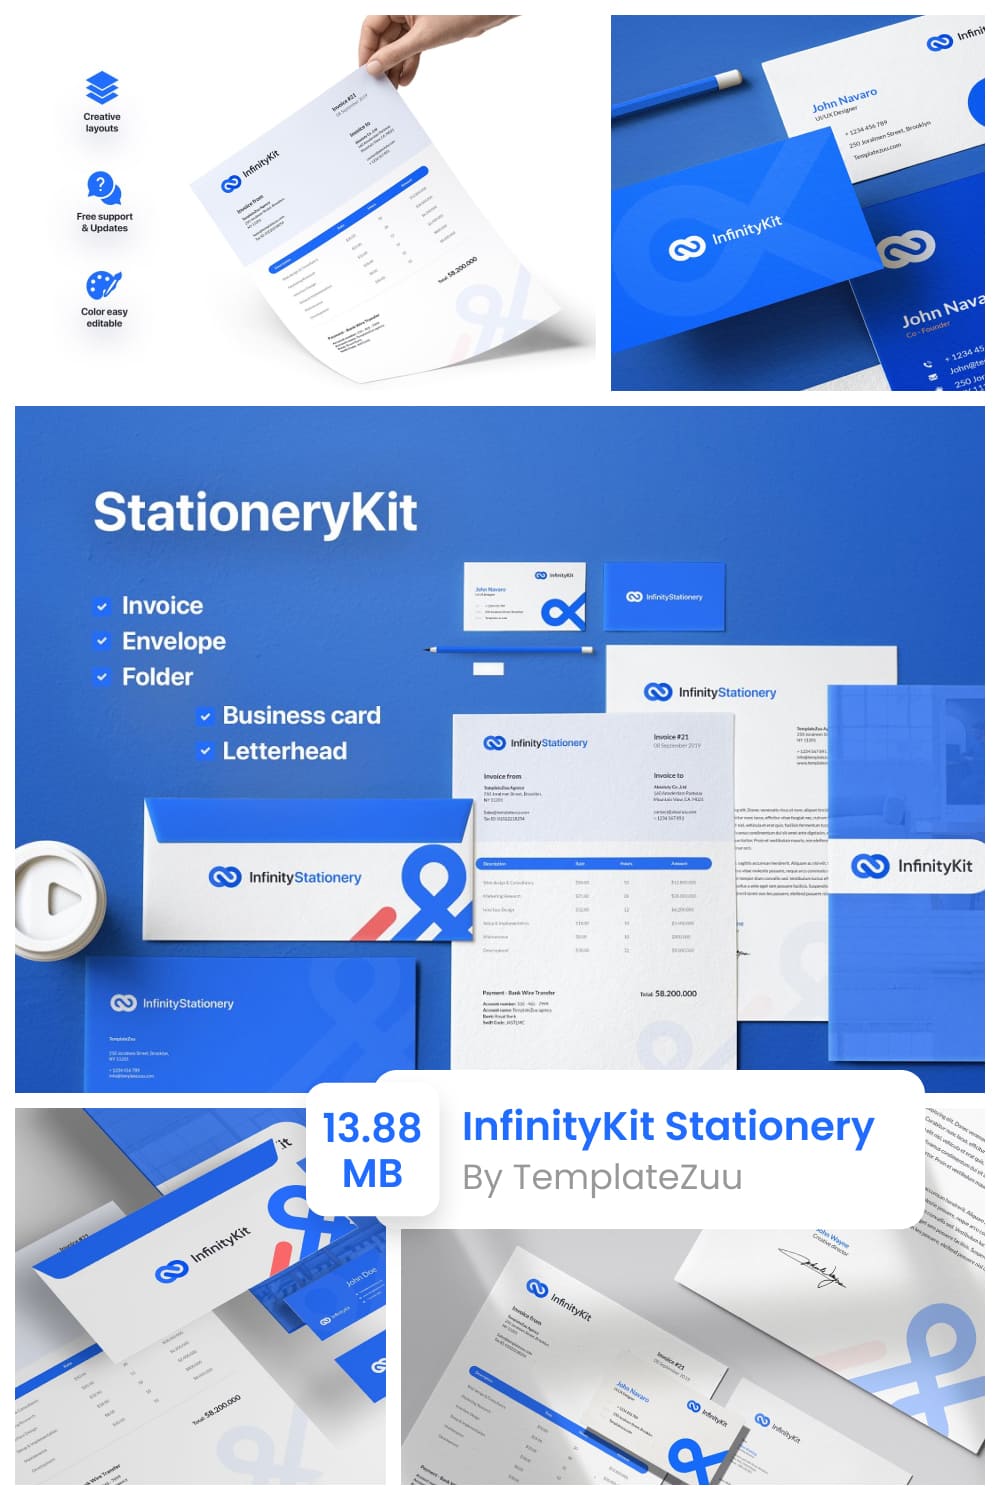 InfinityKit Stationery by MasterBundles Pinterest Collage Image.